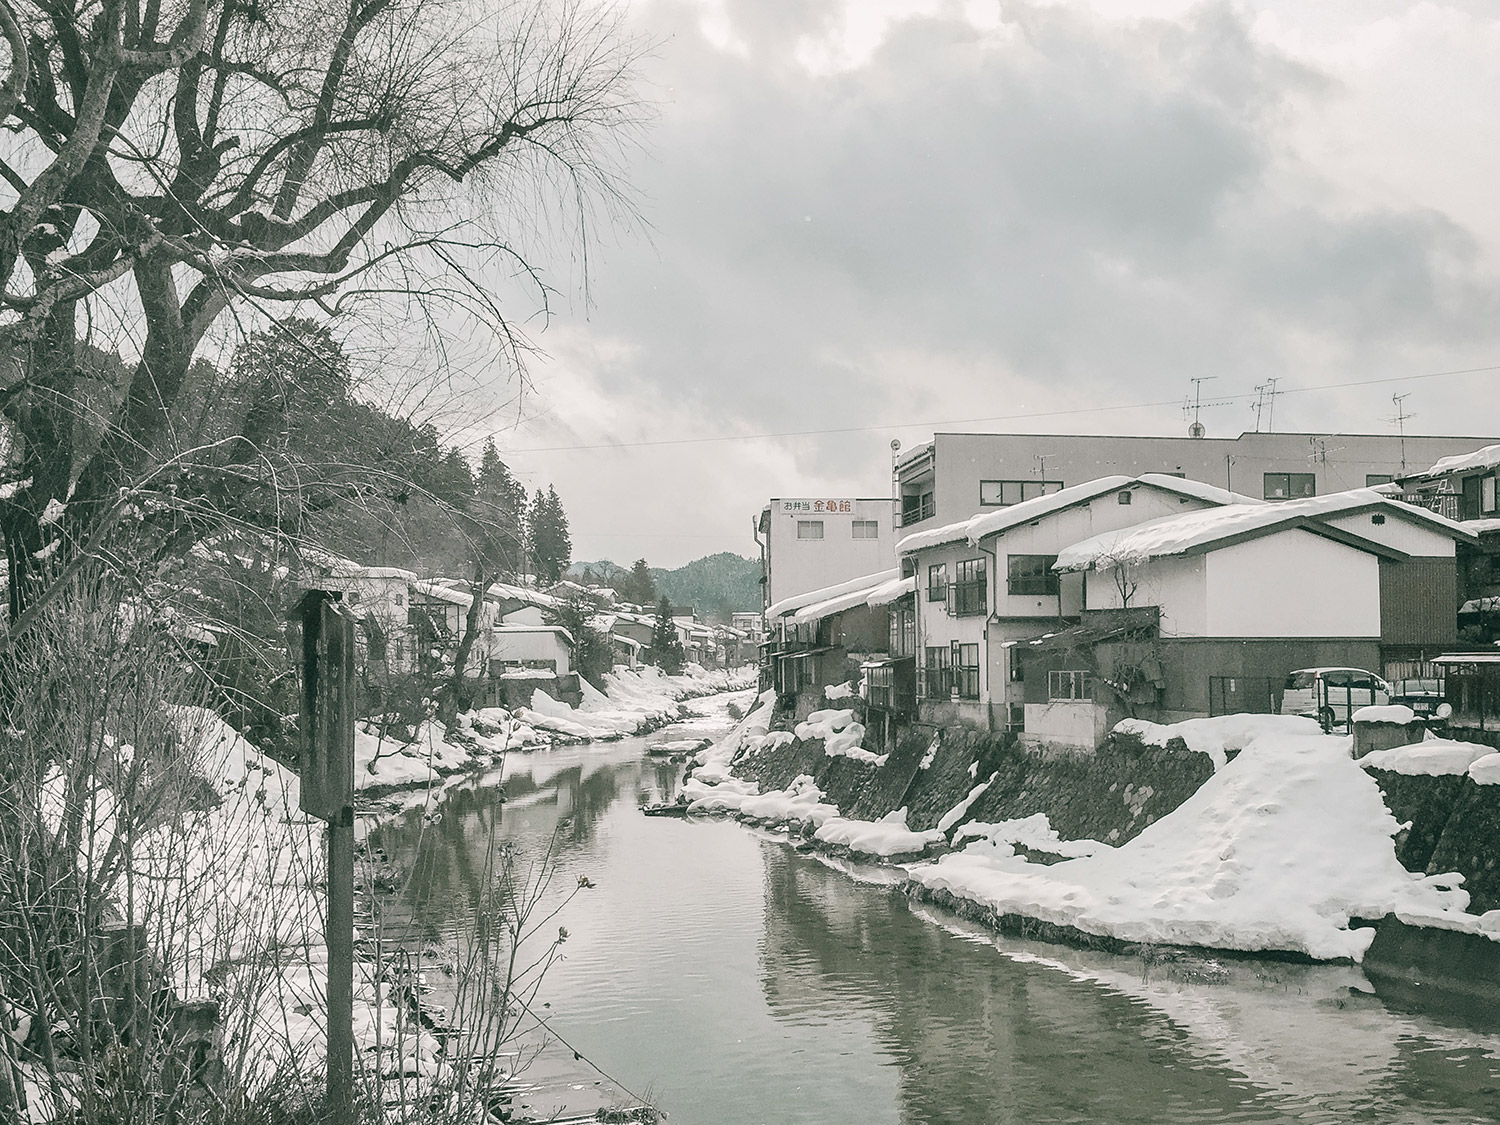 A Snowy Winter Day in Takayama